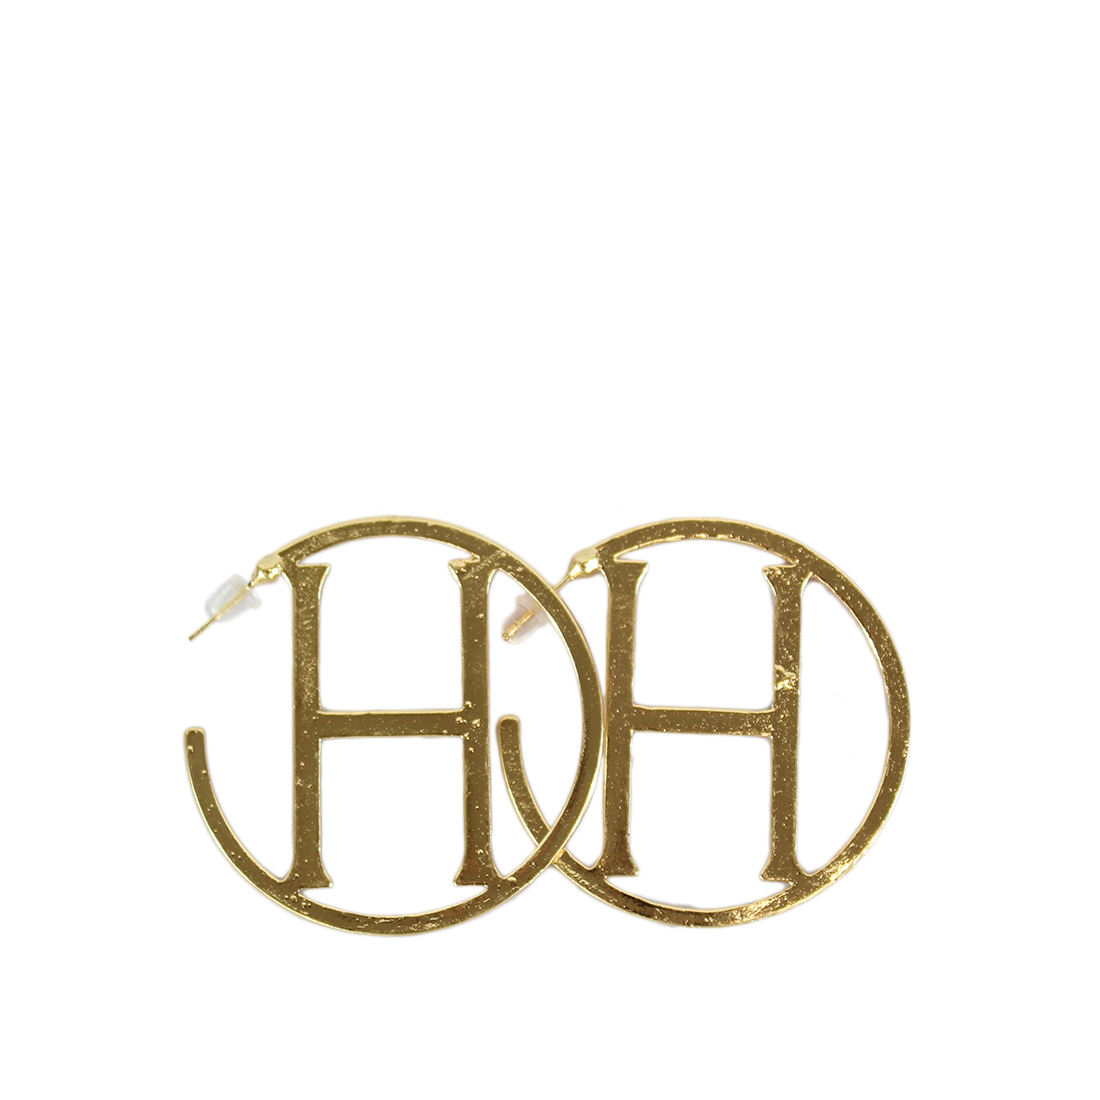 H sign